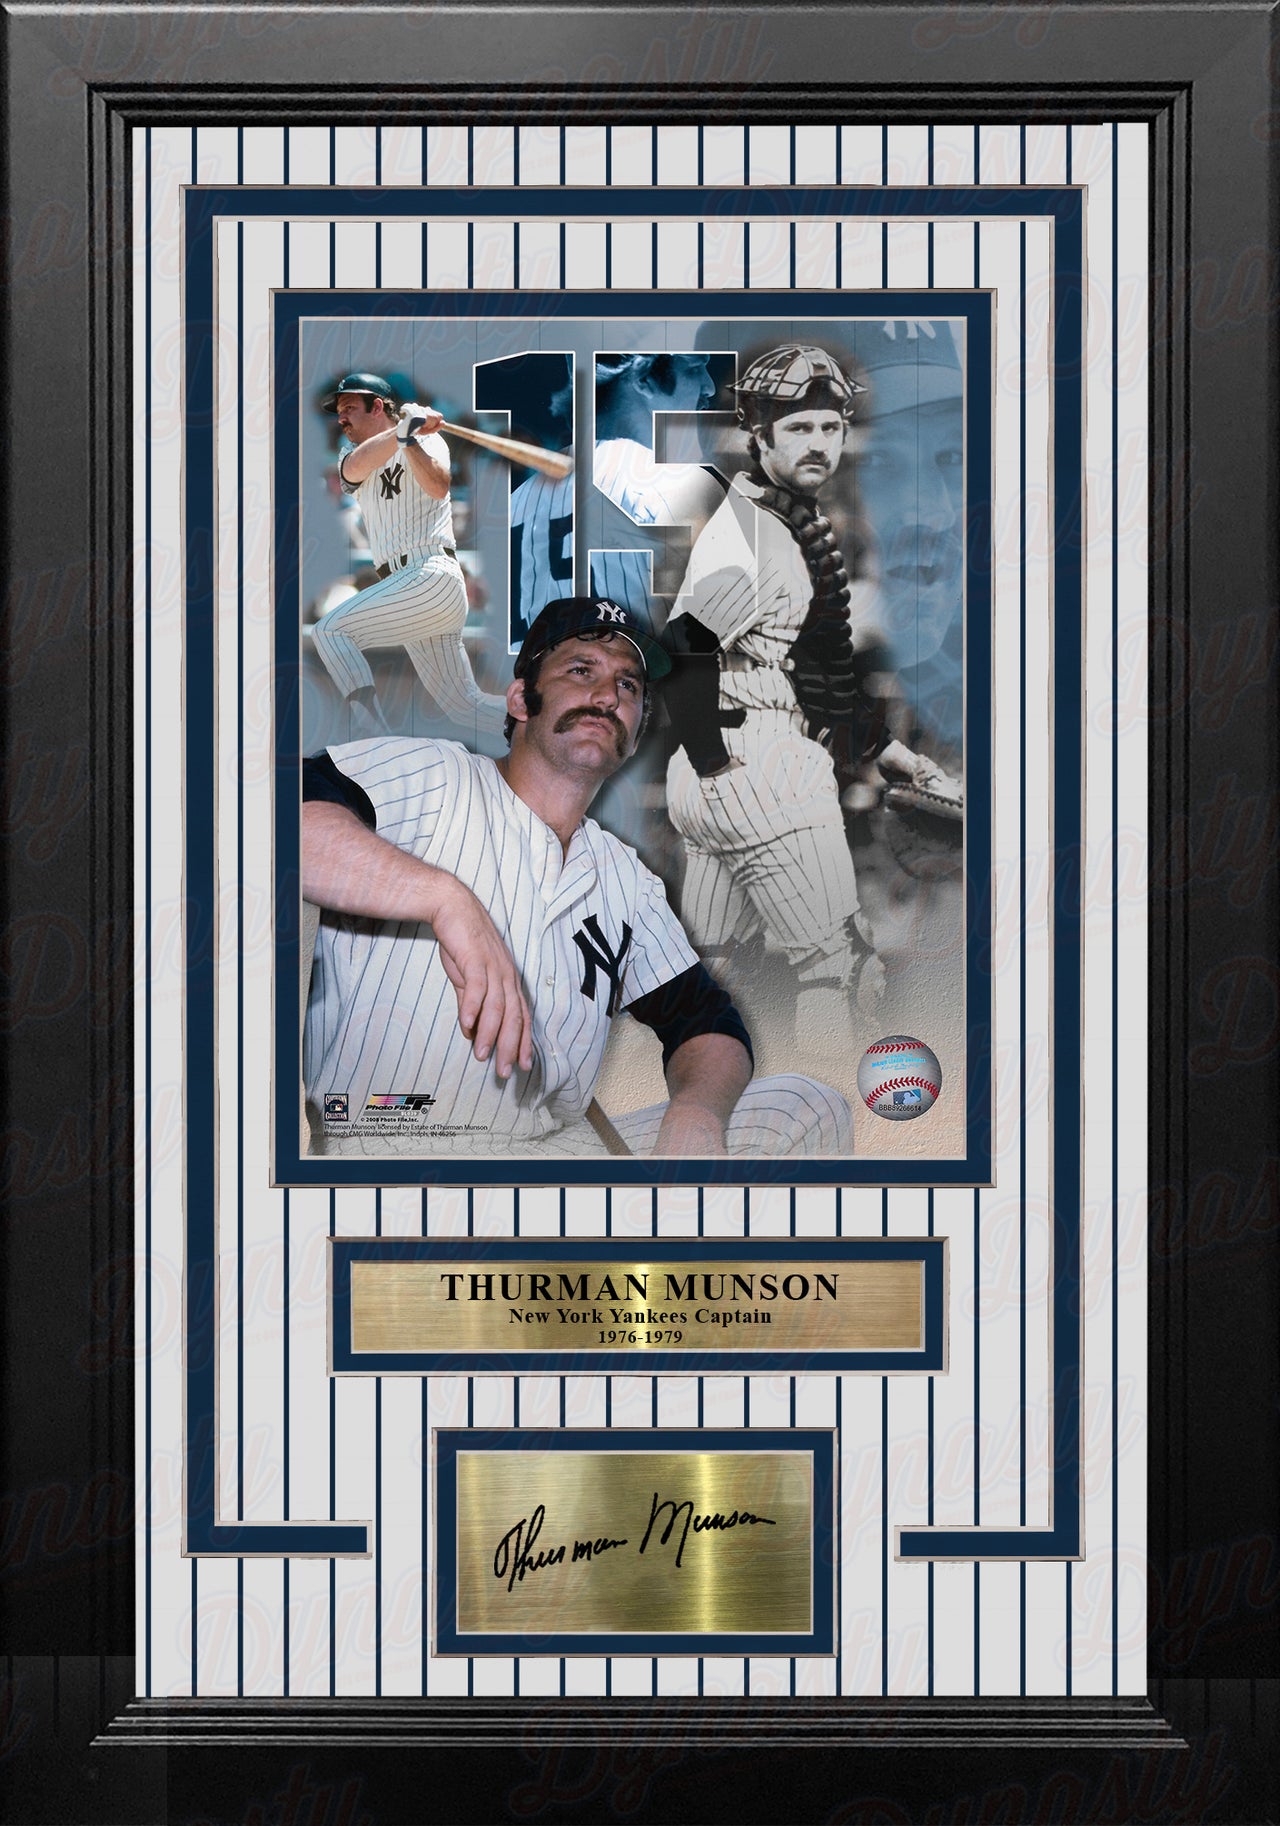 Derek Jeter Autographed New York Jump Throw 16x20 Baseball Photo - MLB  Hologram